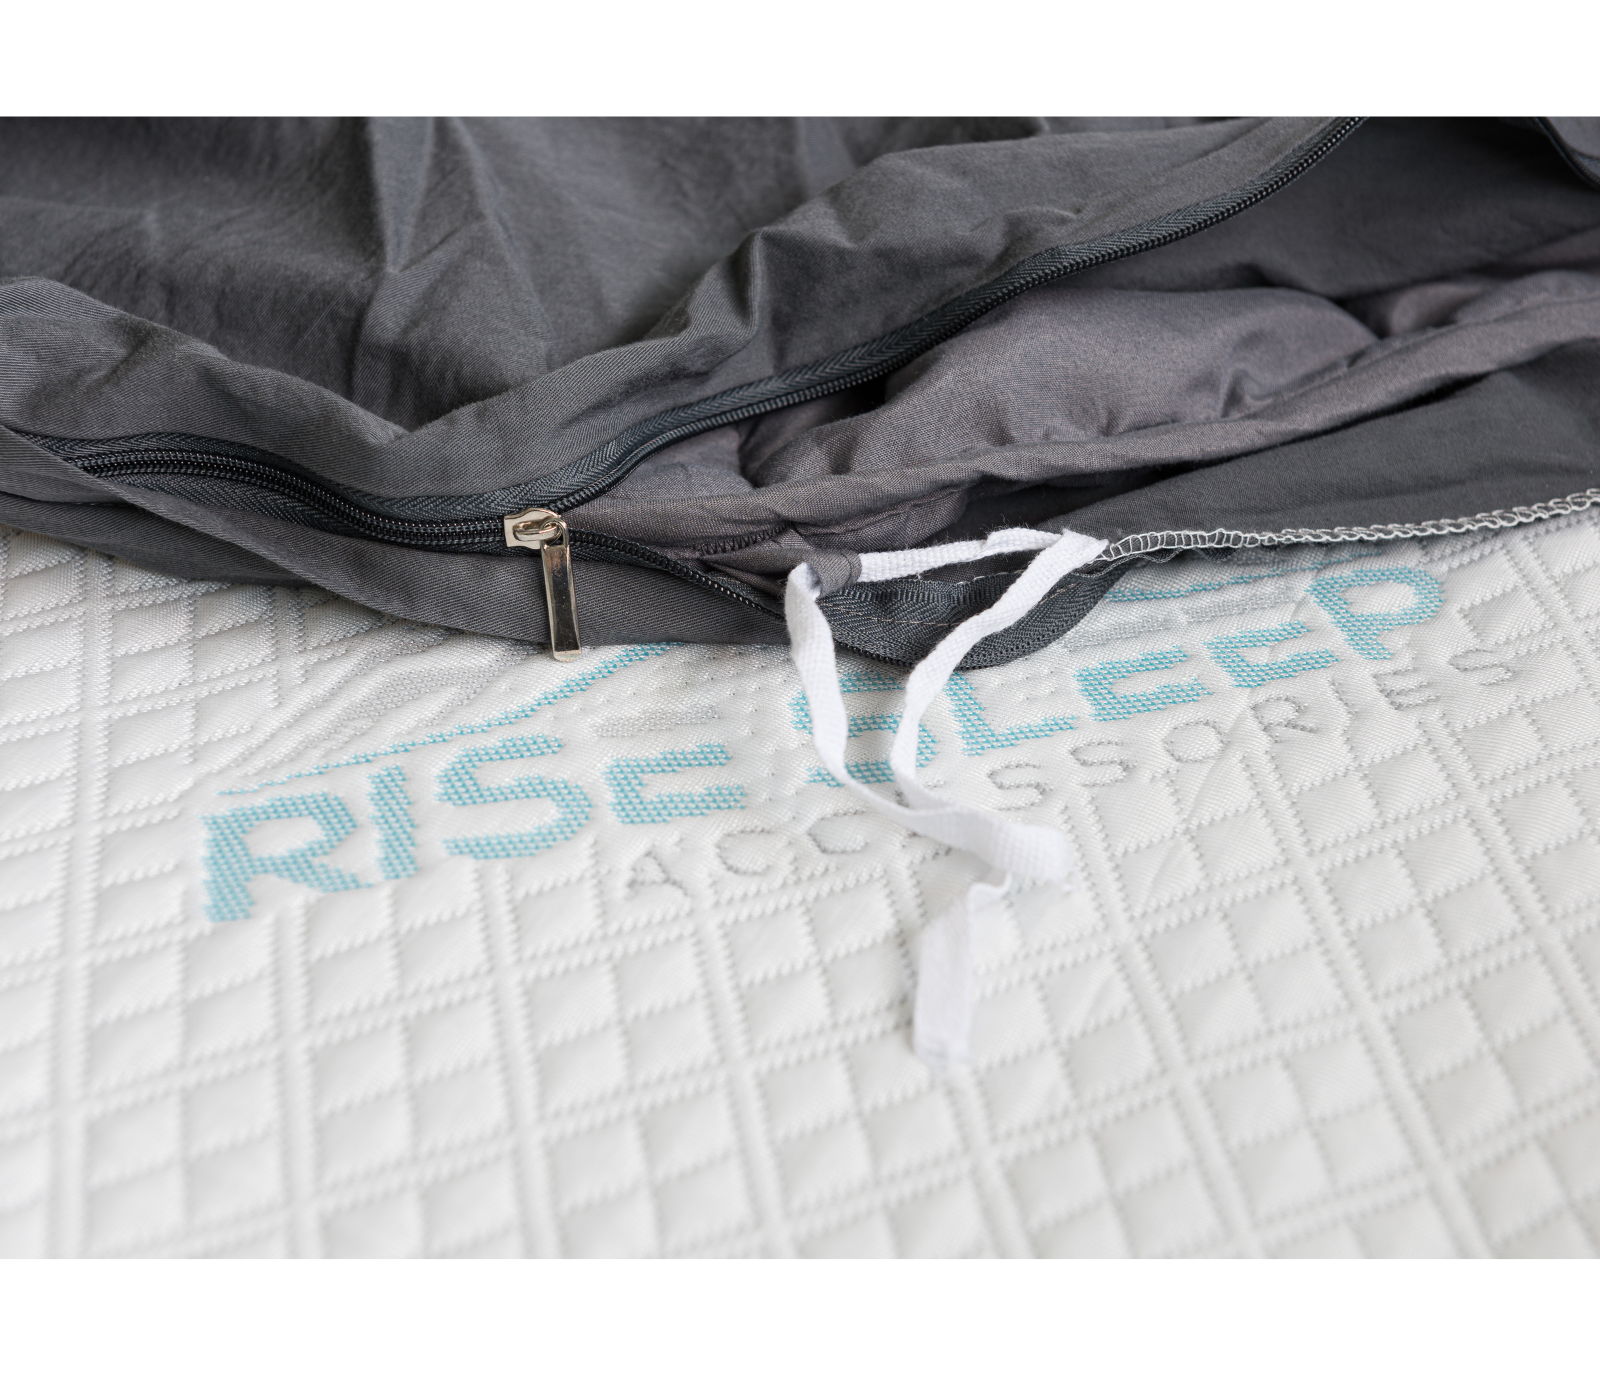 RiseSleep Weighted Blanket